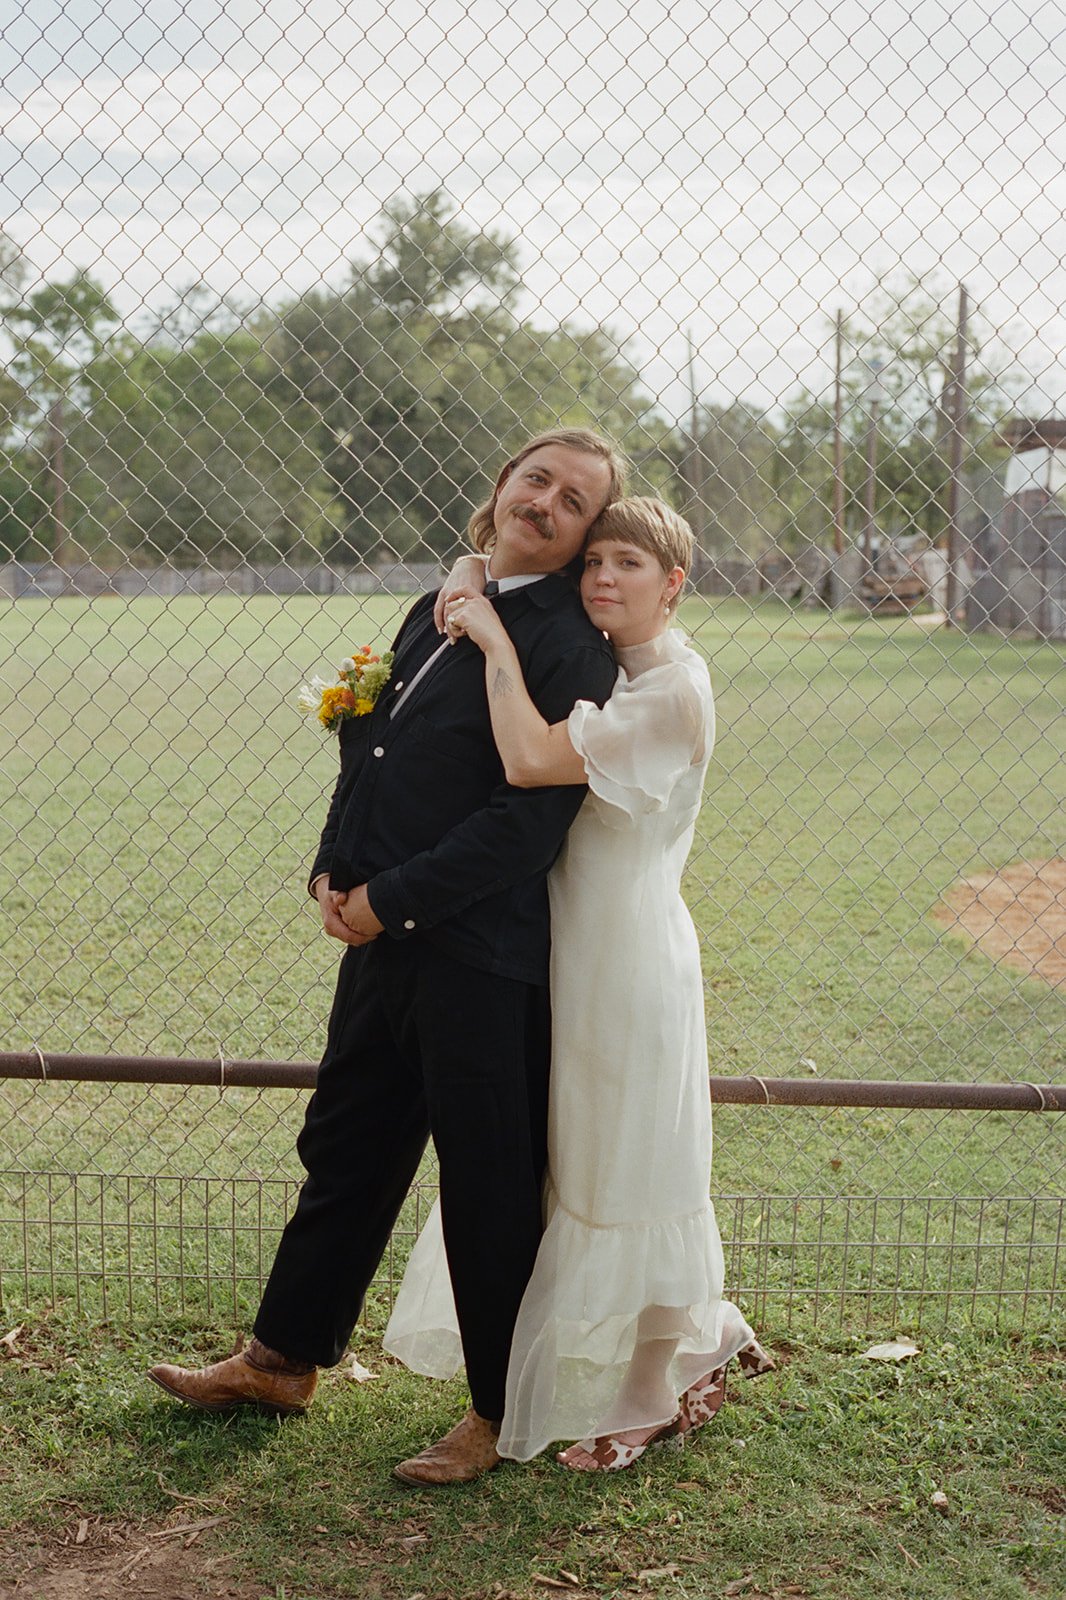 Best-Film-35mm-Austin-Wedding-Photographer-the-Long-time-Super8-42.jpg